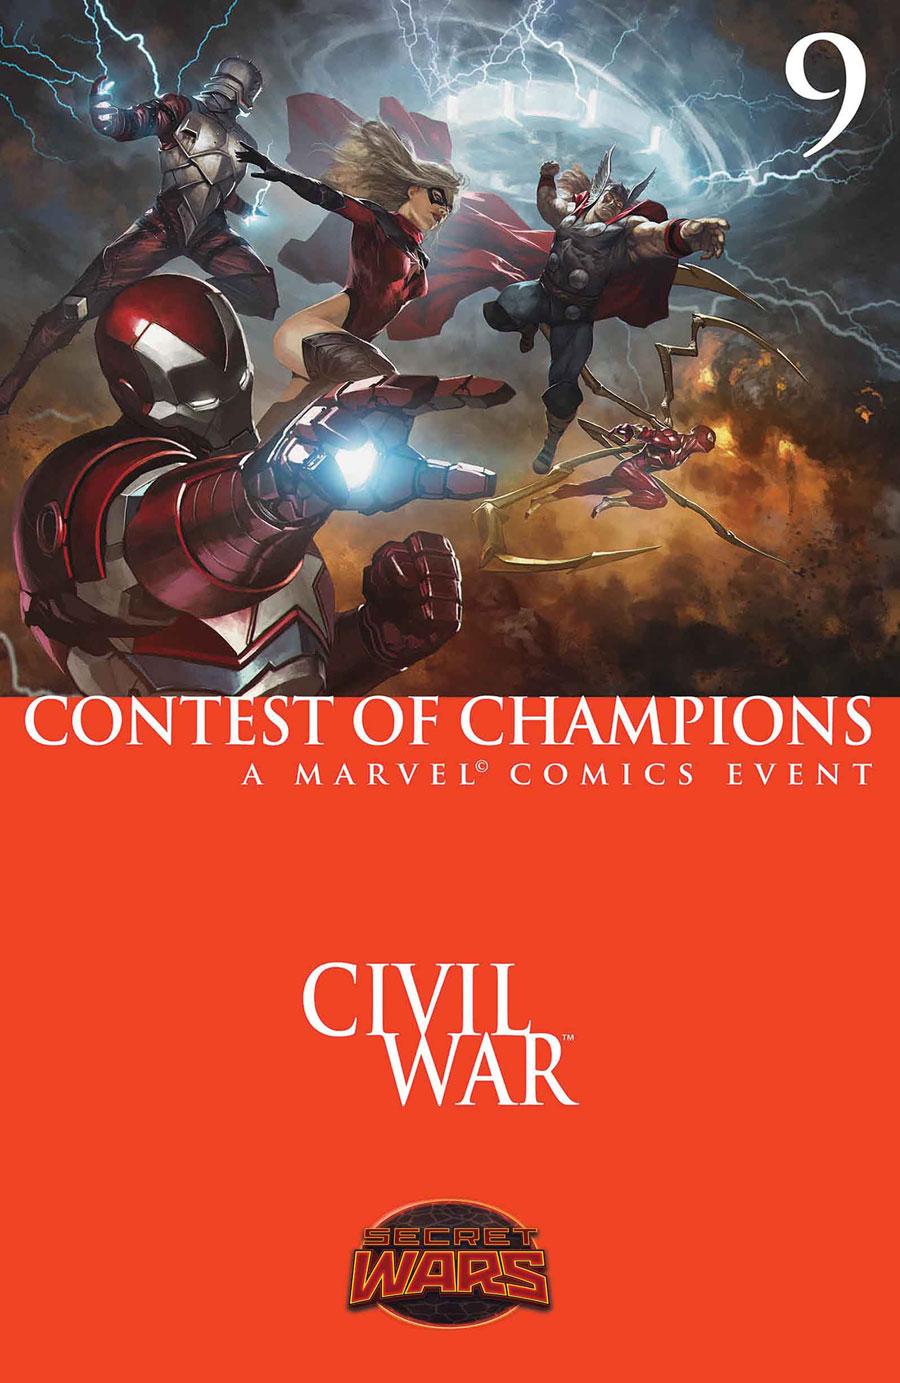 Contest of Champions Vol. 2 #9